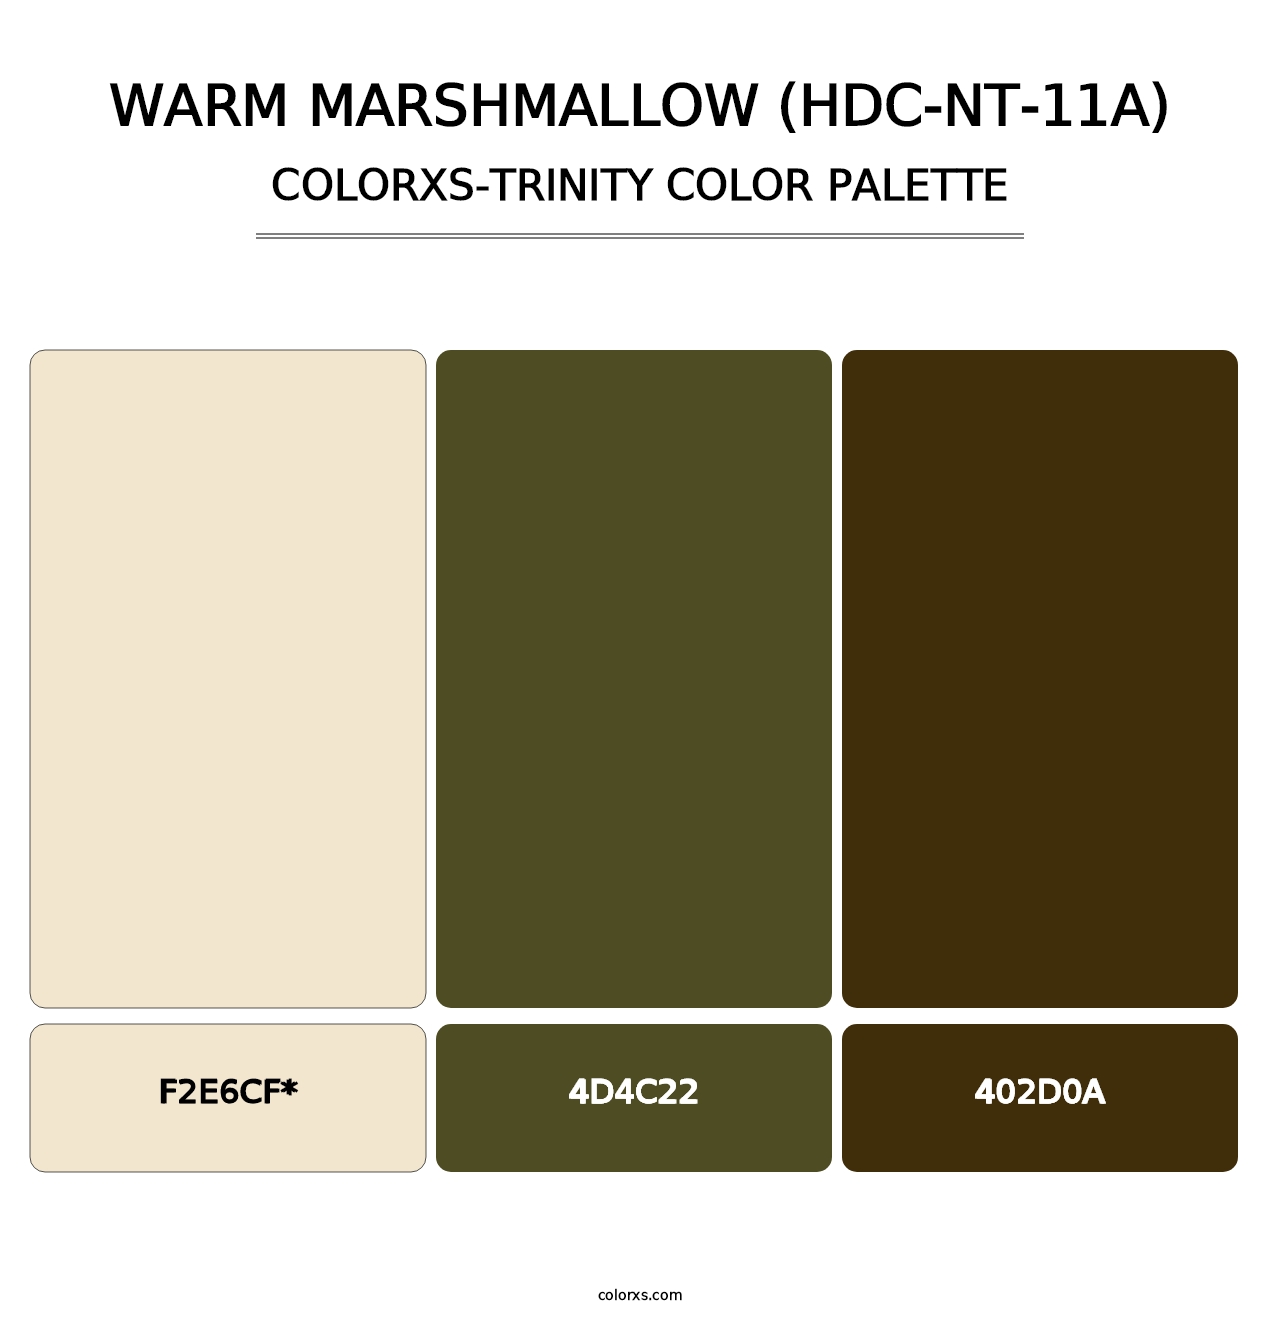 Warm Marshmallow (HDC-NT-11A) - Colorxs Trinity Palette